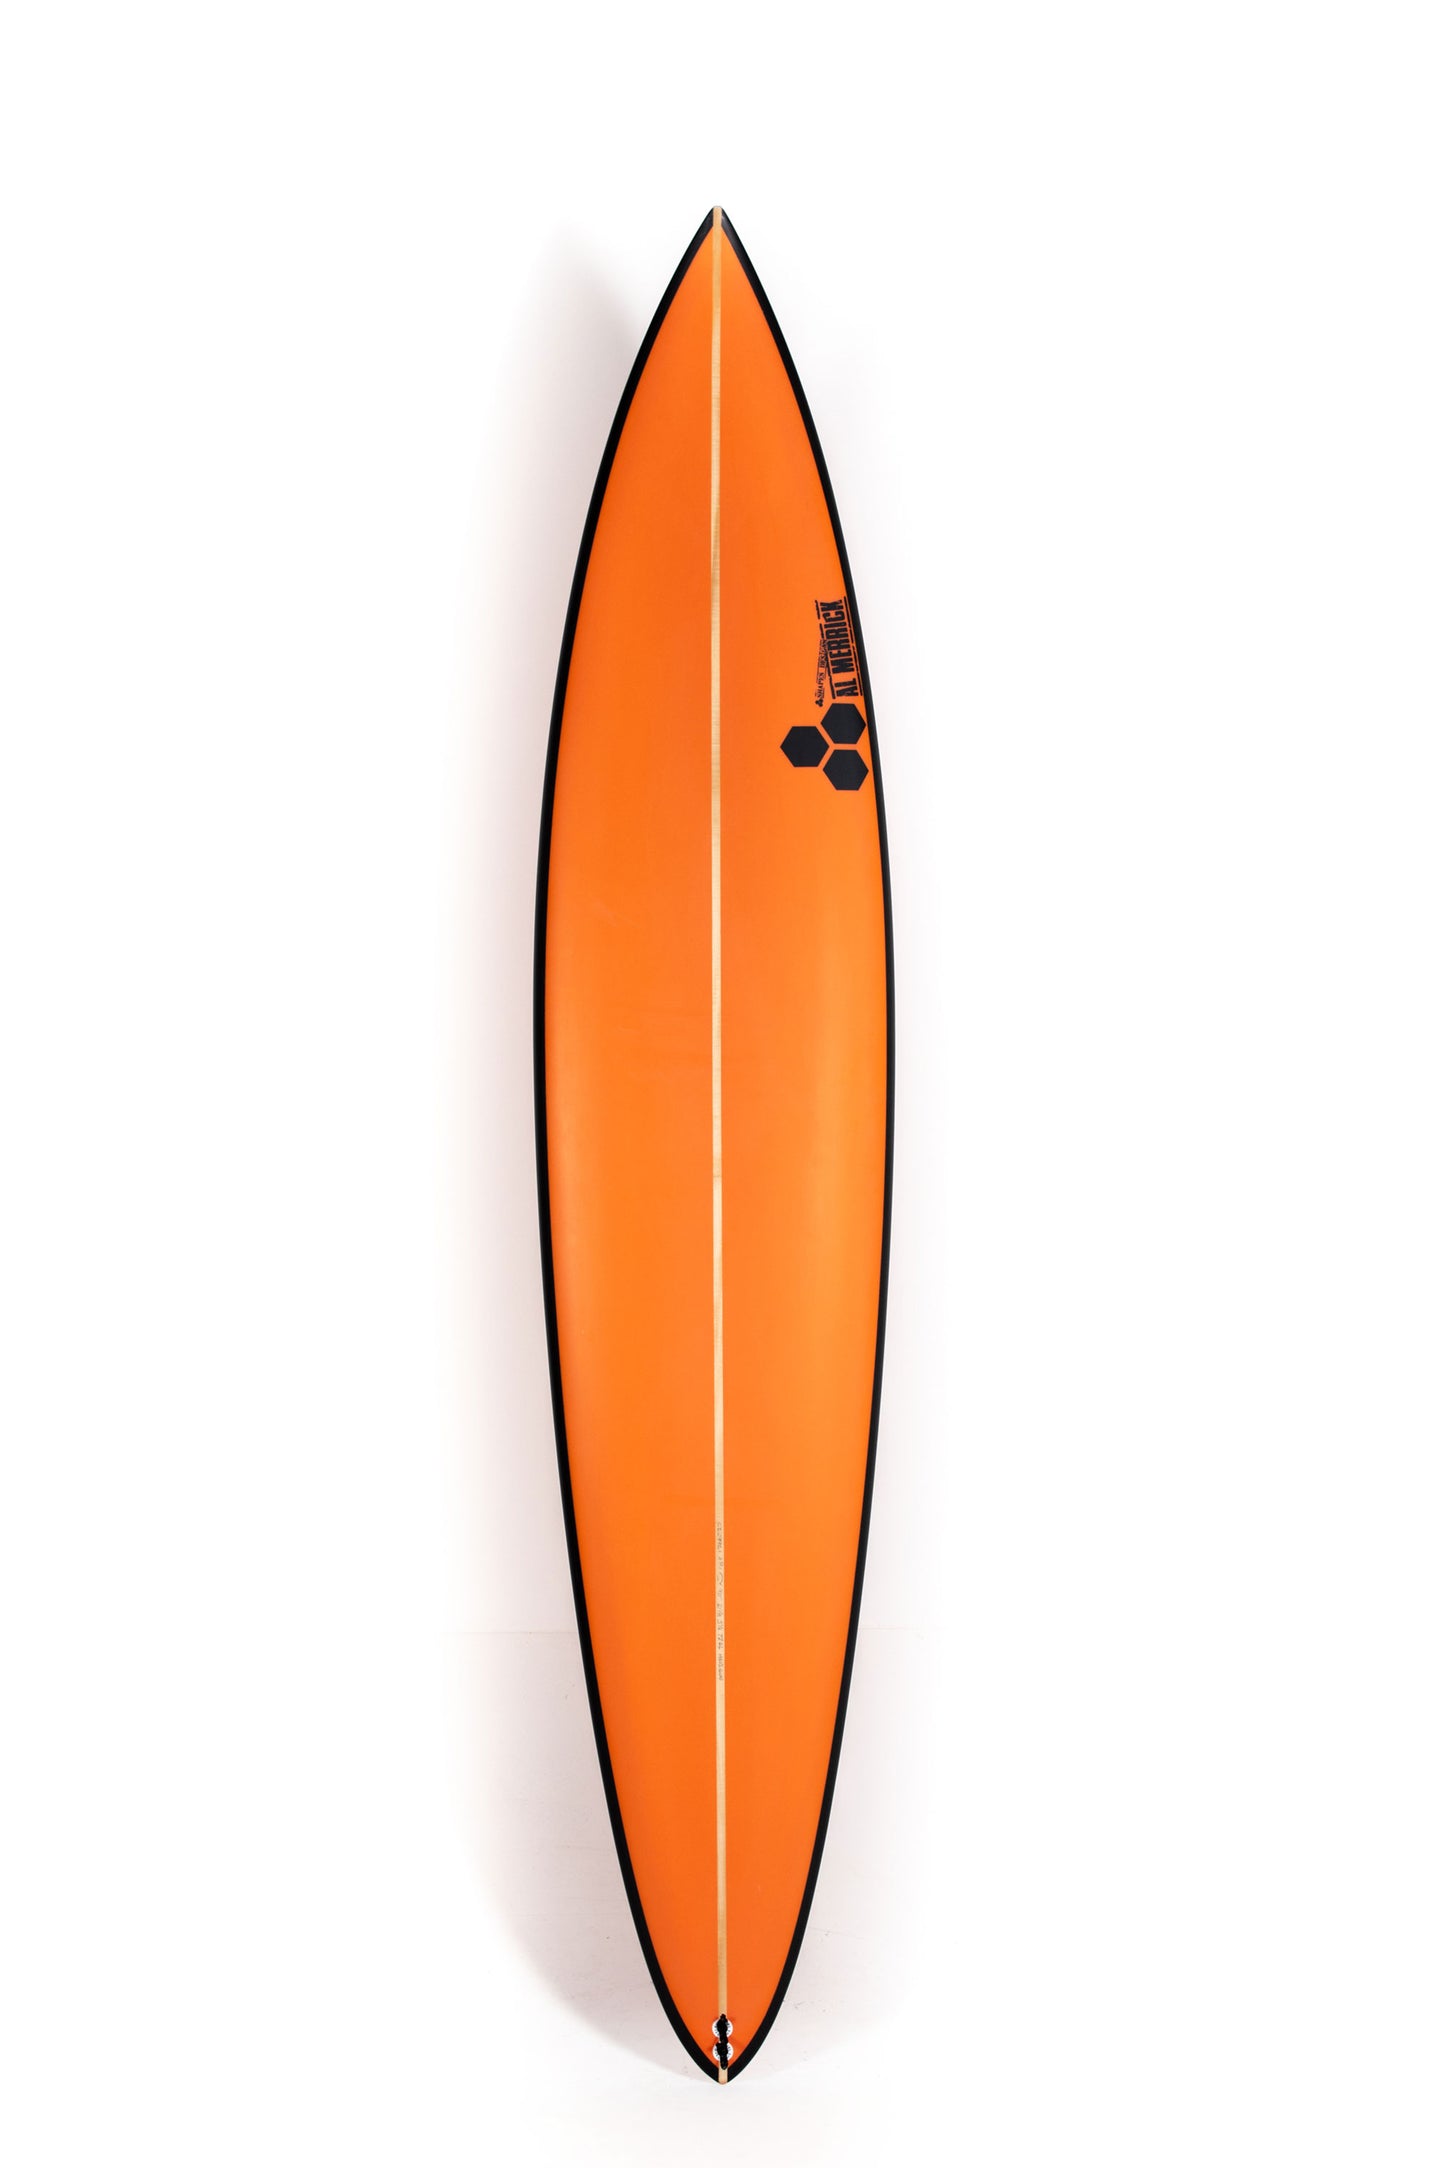 Pukas-Surf-Shop-Channel-Island-Surfboards-Mav_s-Gun-Al-Merrick-9_0